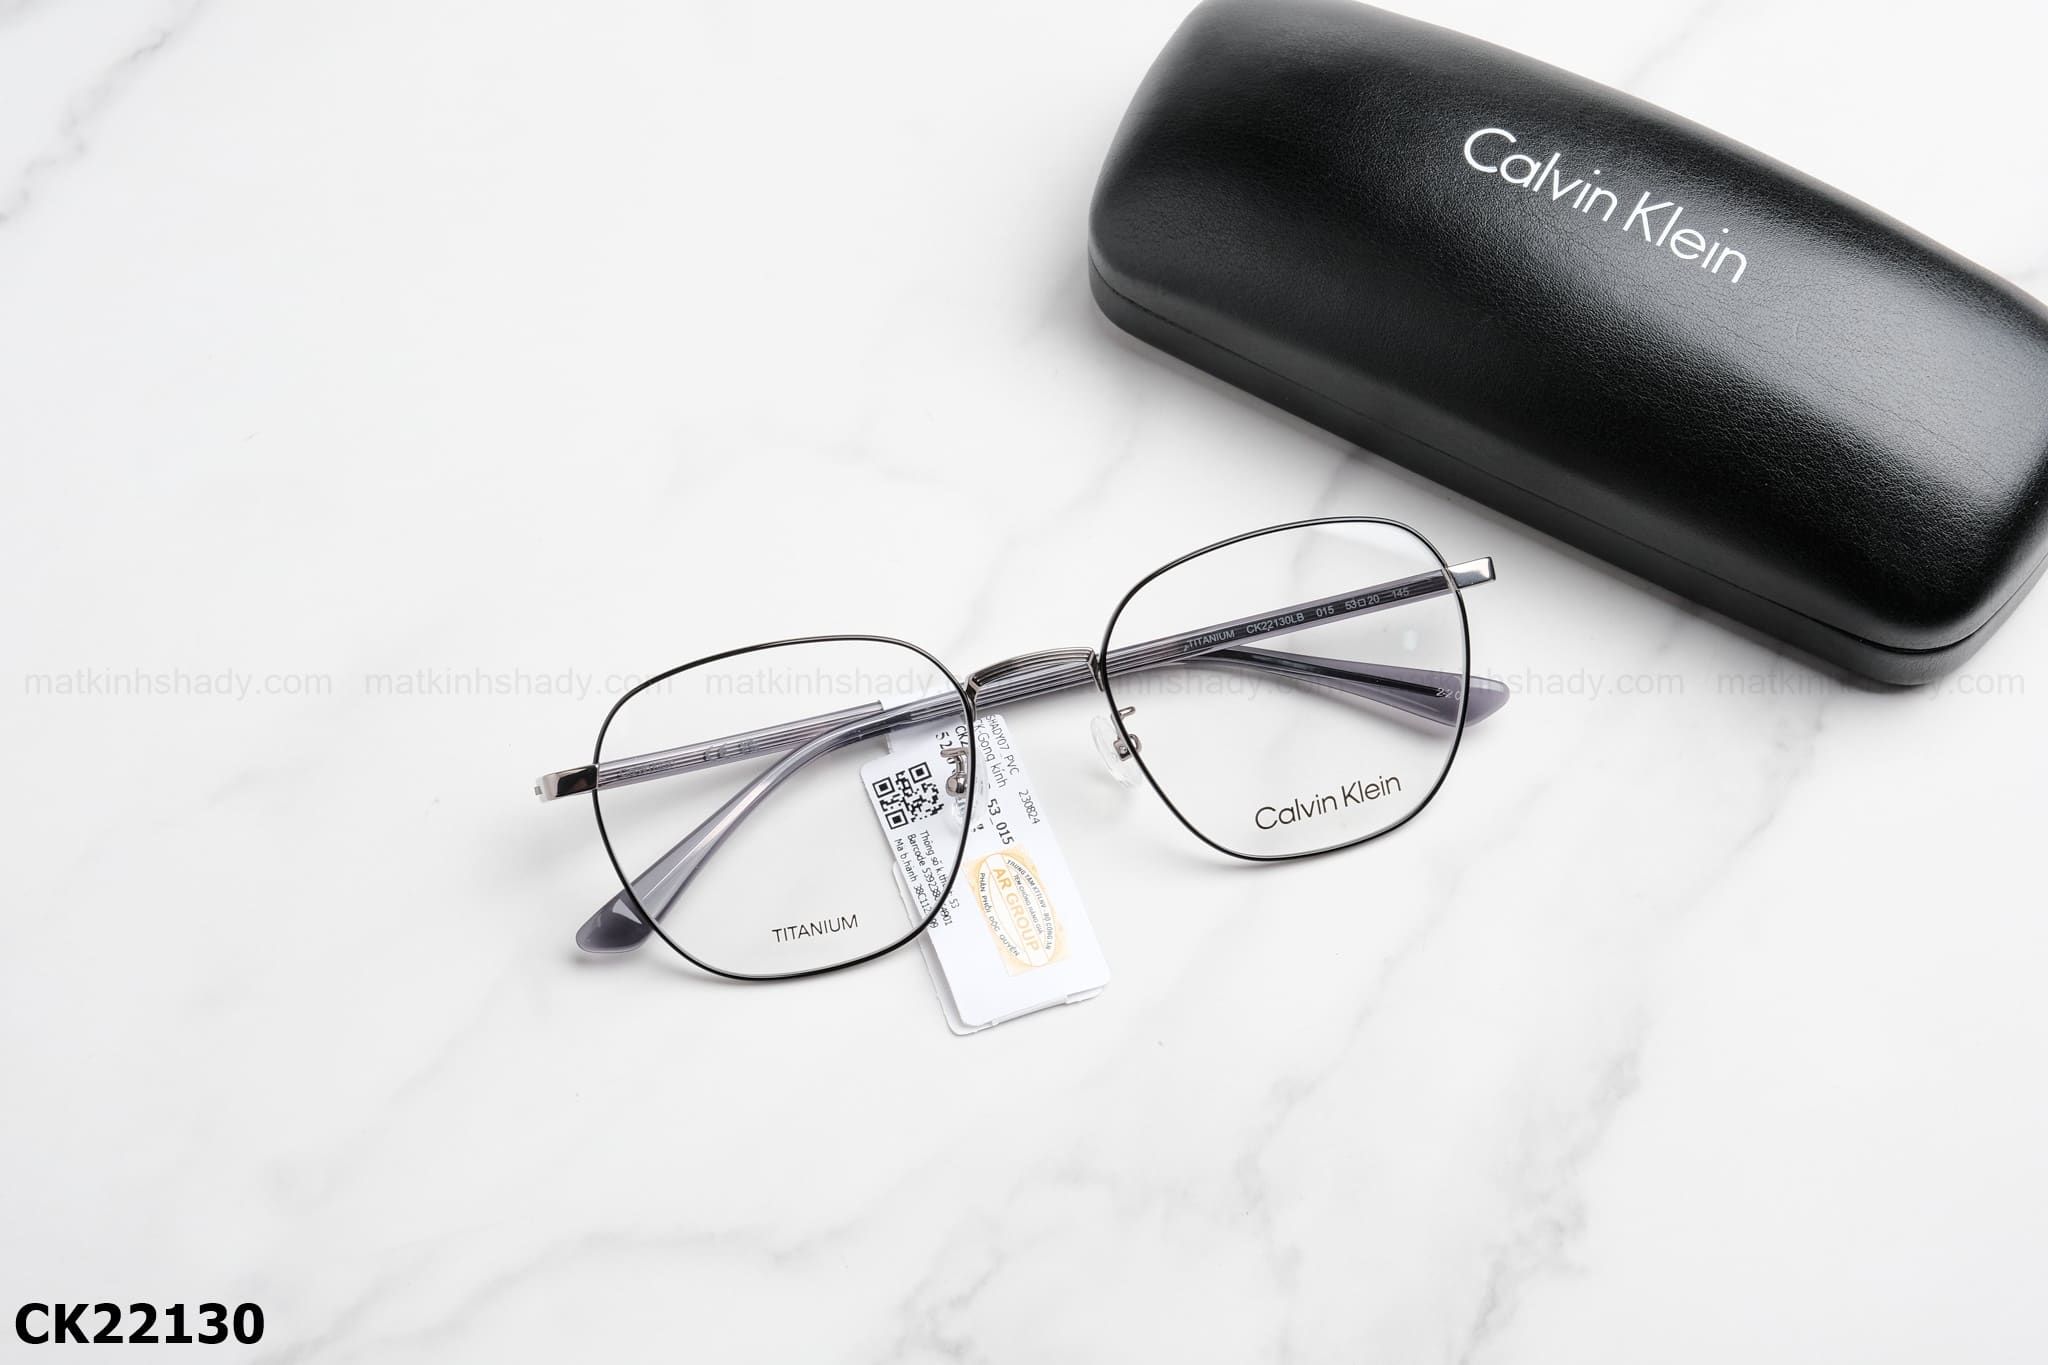  Calvin Klein Eyewear - Glasses - CK22130 